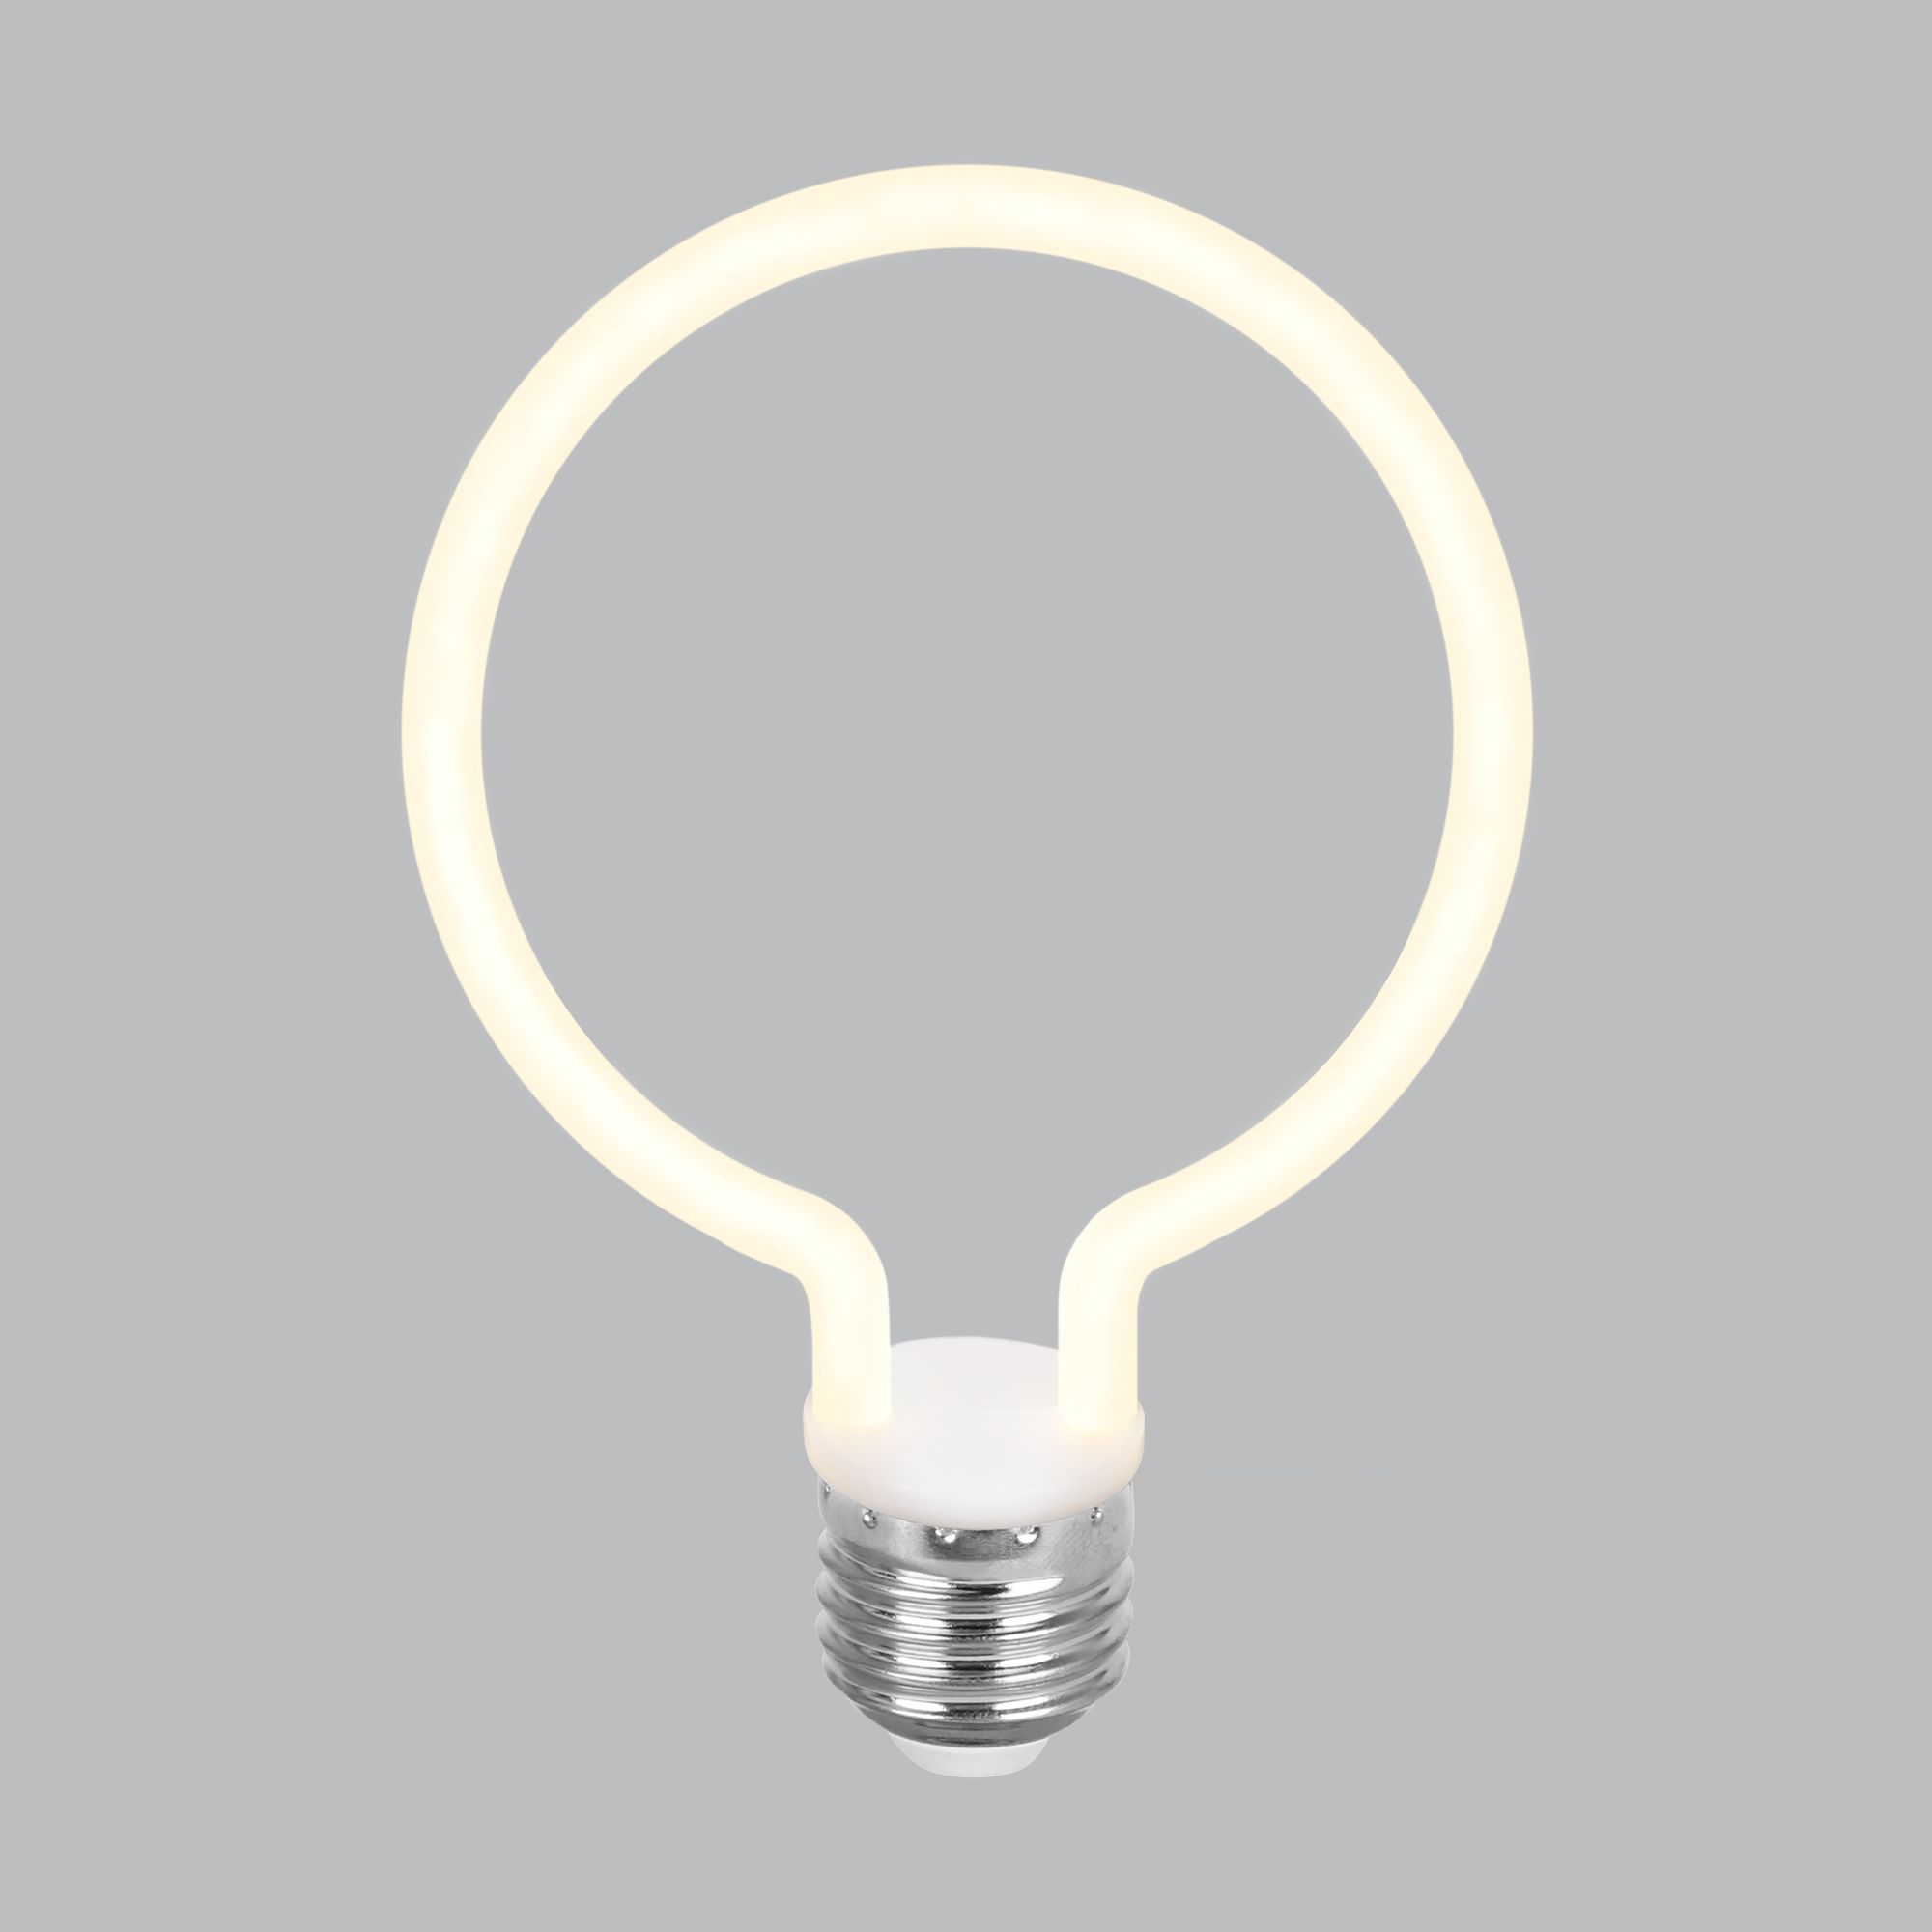 Филаментная светодиодная лампа Decor filament 4W 2700K E27 Elektrostandard Decor filament BL156. Фото 2